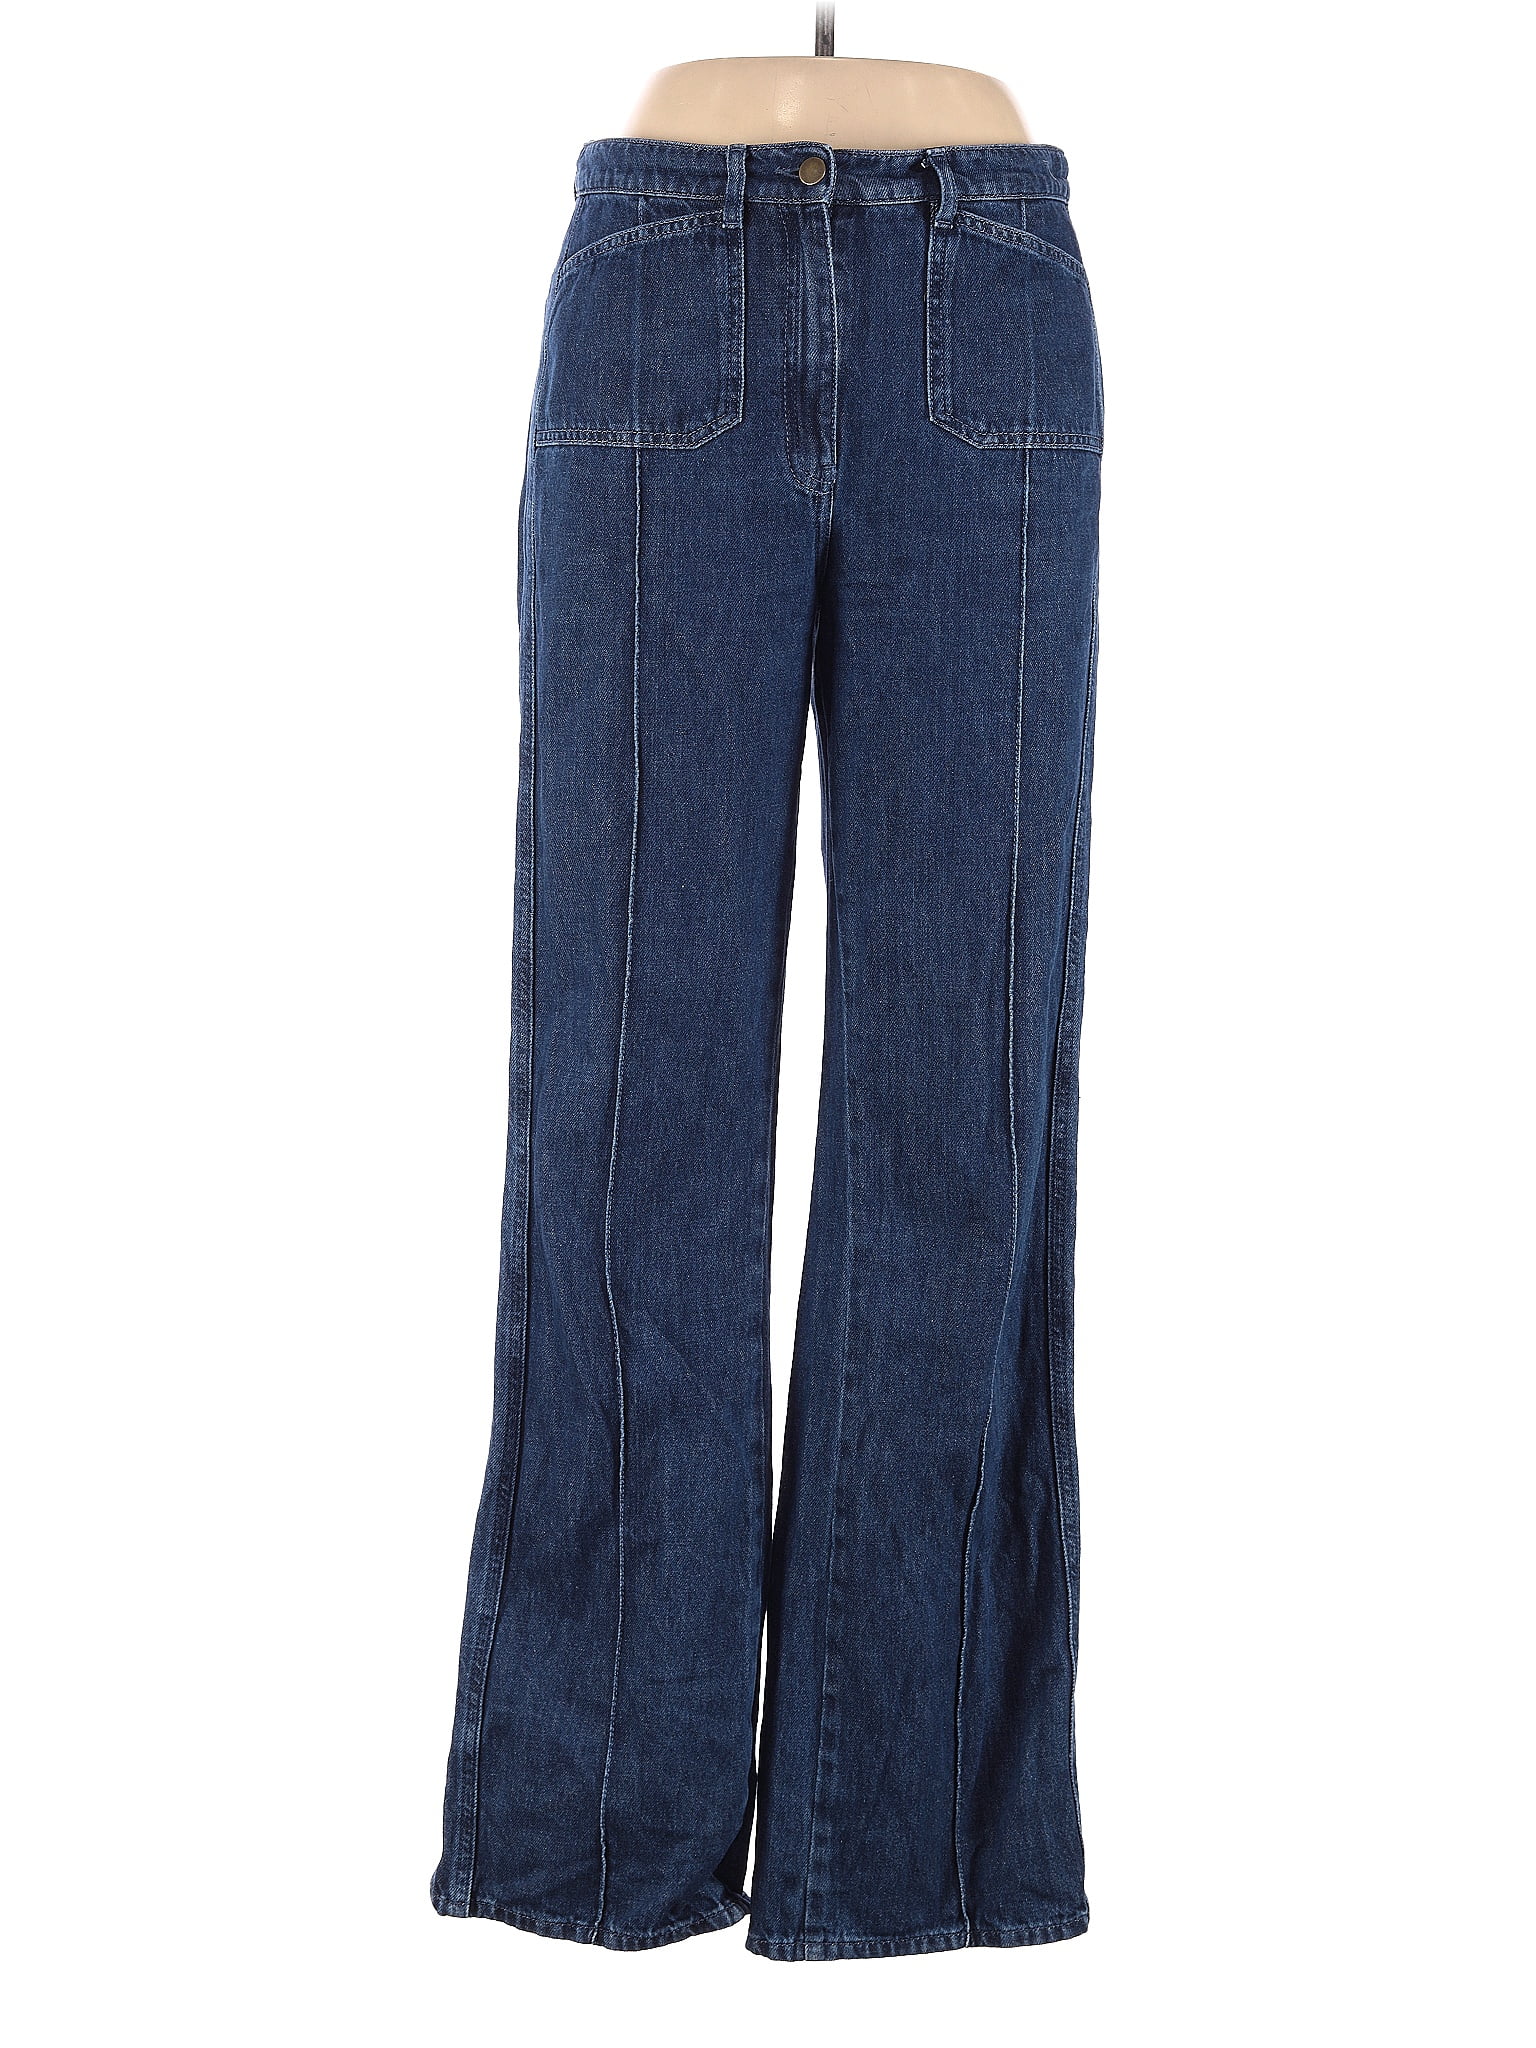 Iris & Ink 100% Cotton Solid Blue Jeans Size 14 - 81% off | thredUP